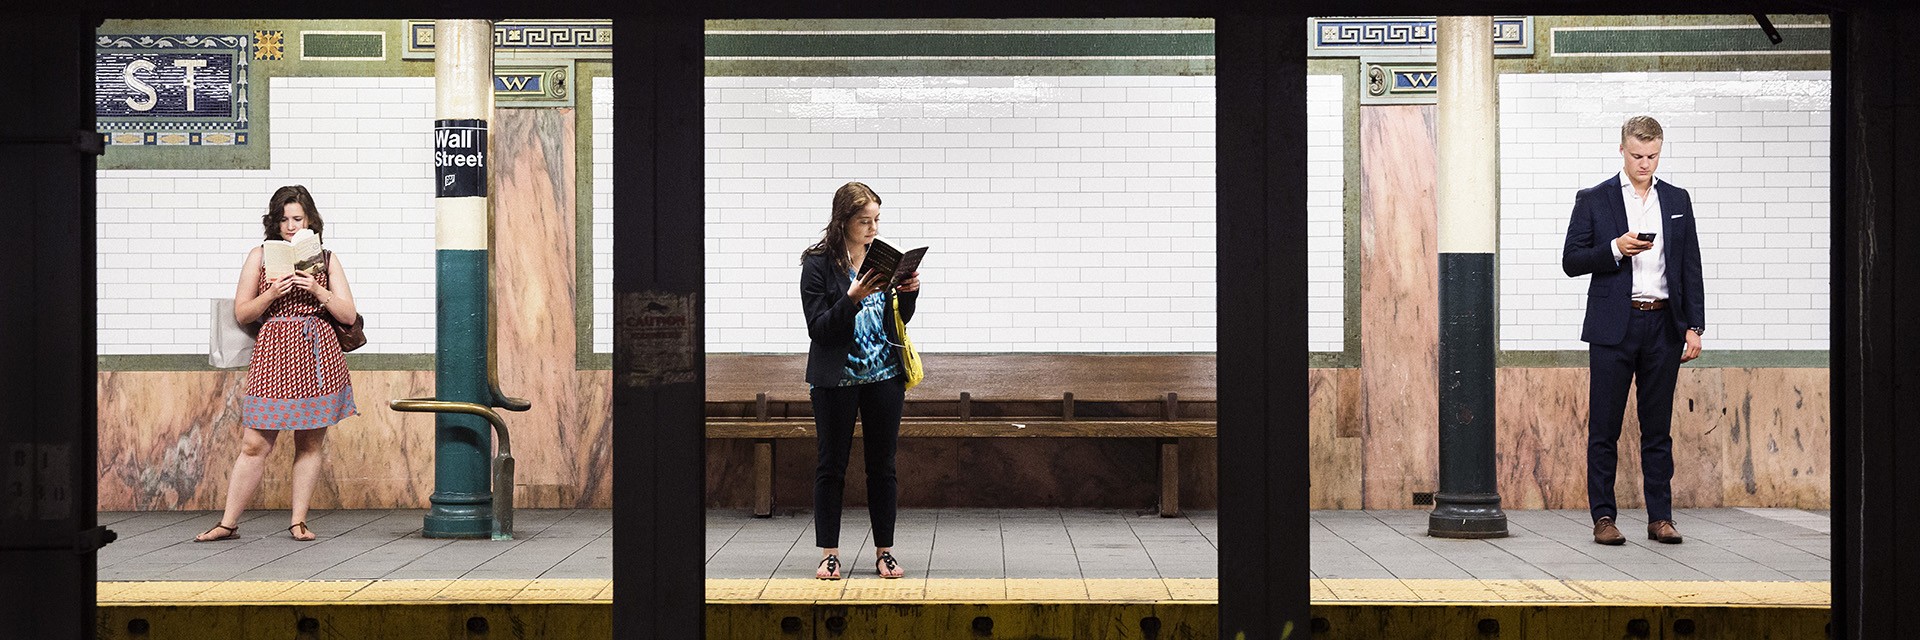 Из серии Платформы. Уолл-стрит, Нью-Йорк. Фотограф Натан Двир